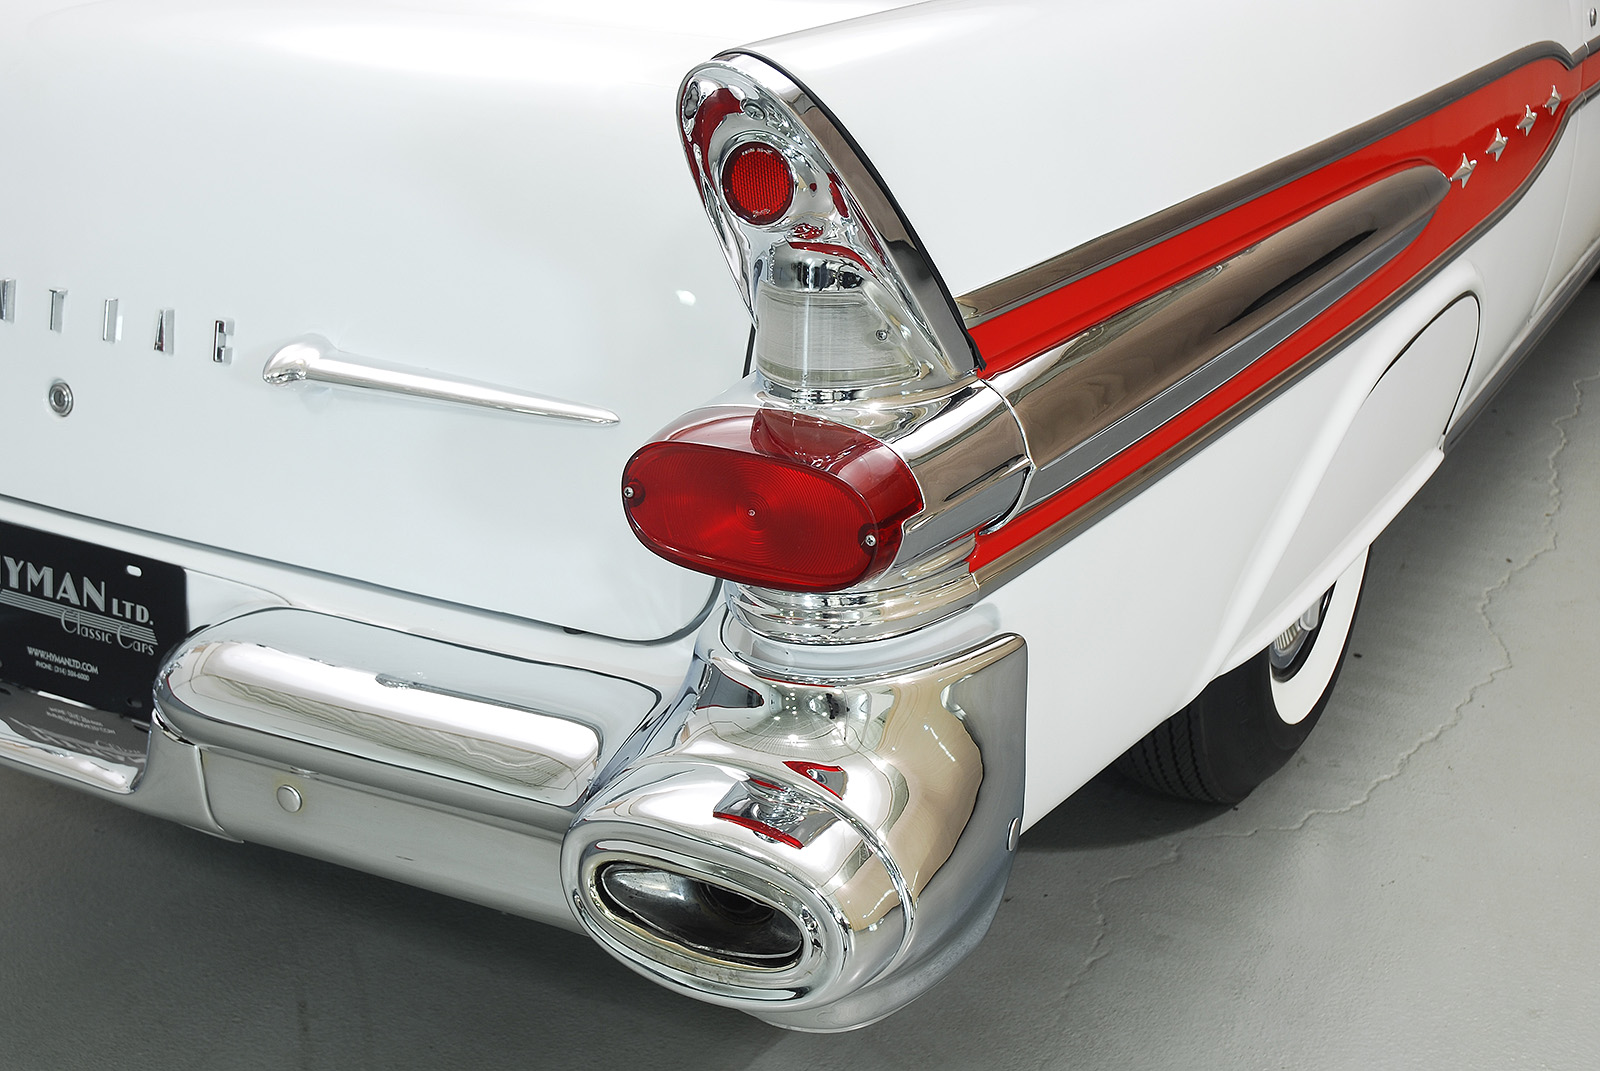 1955 pontiac star chief custom